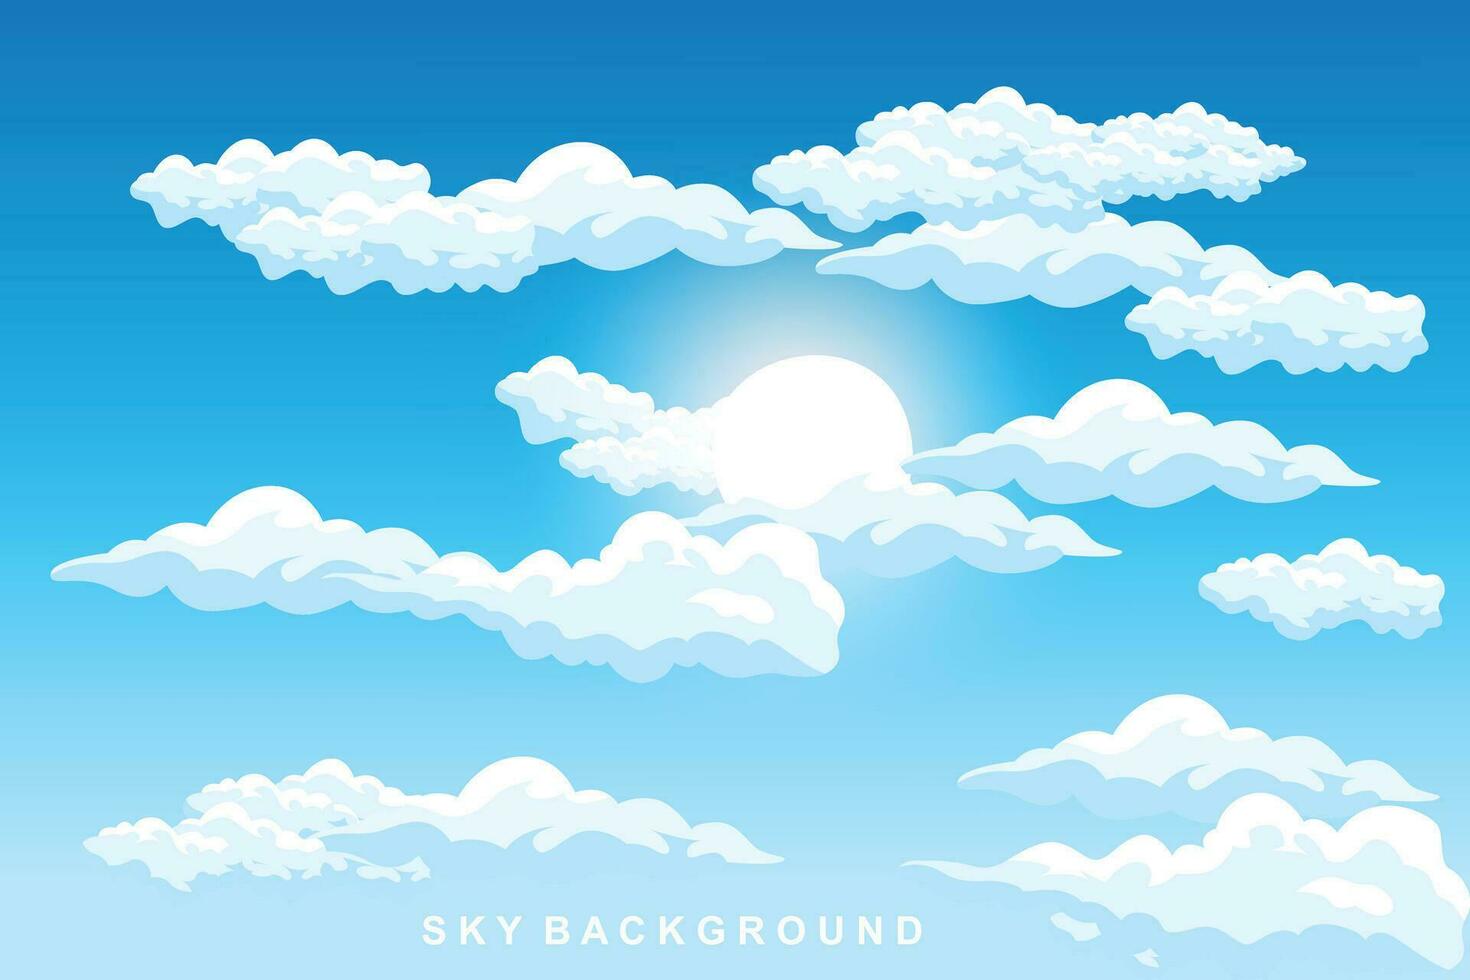 lucht wolk achtergrond ontwerp illustratie sjabloon vector decor banier en poster